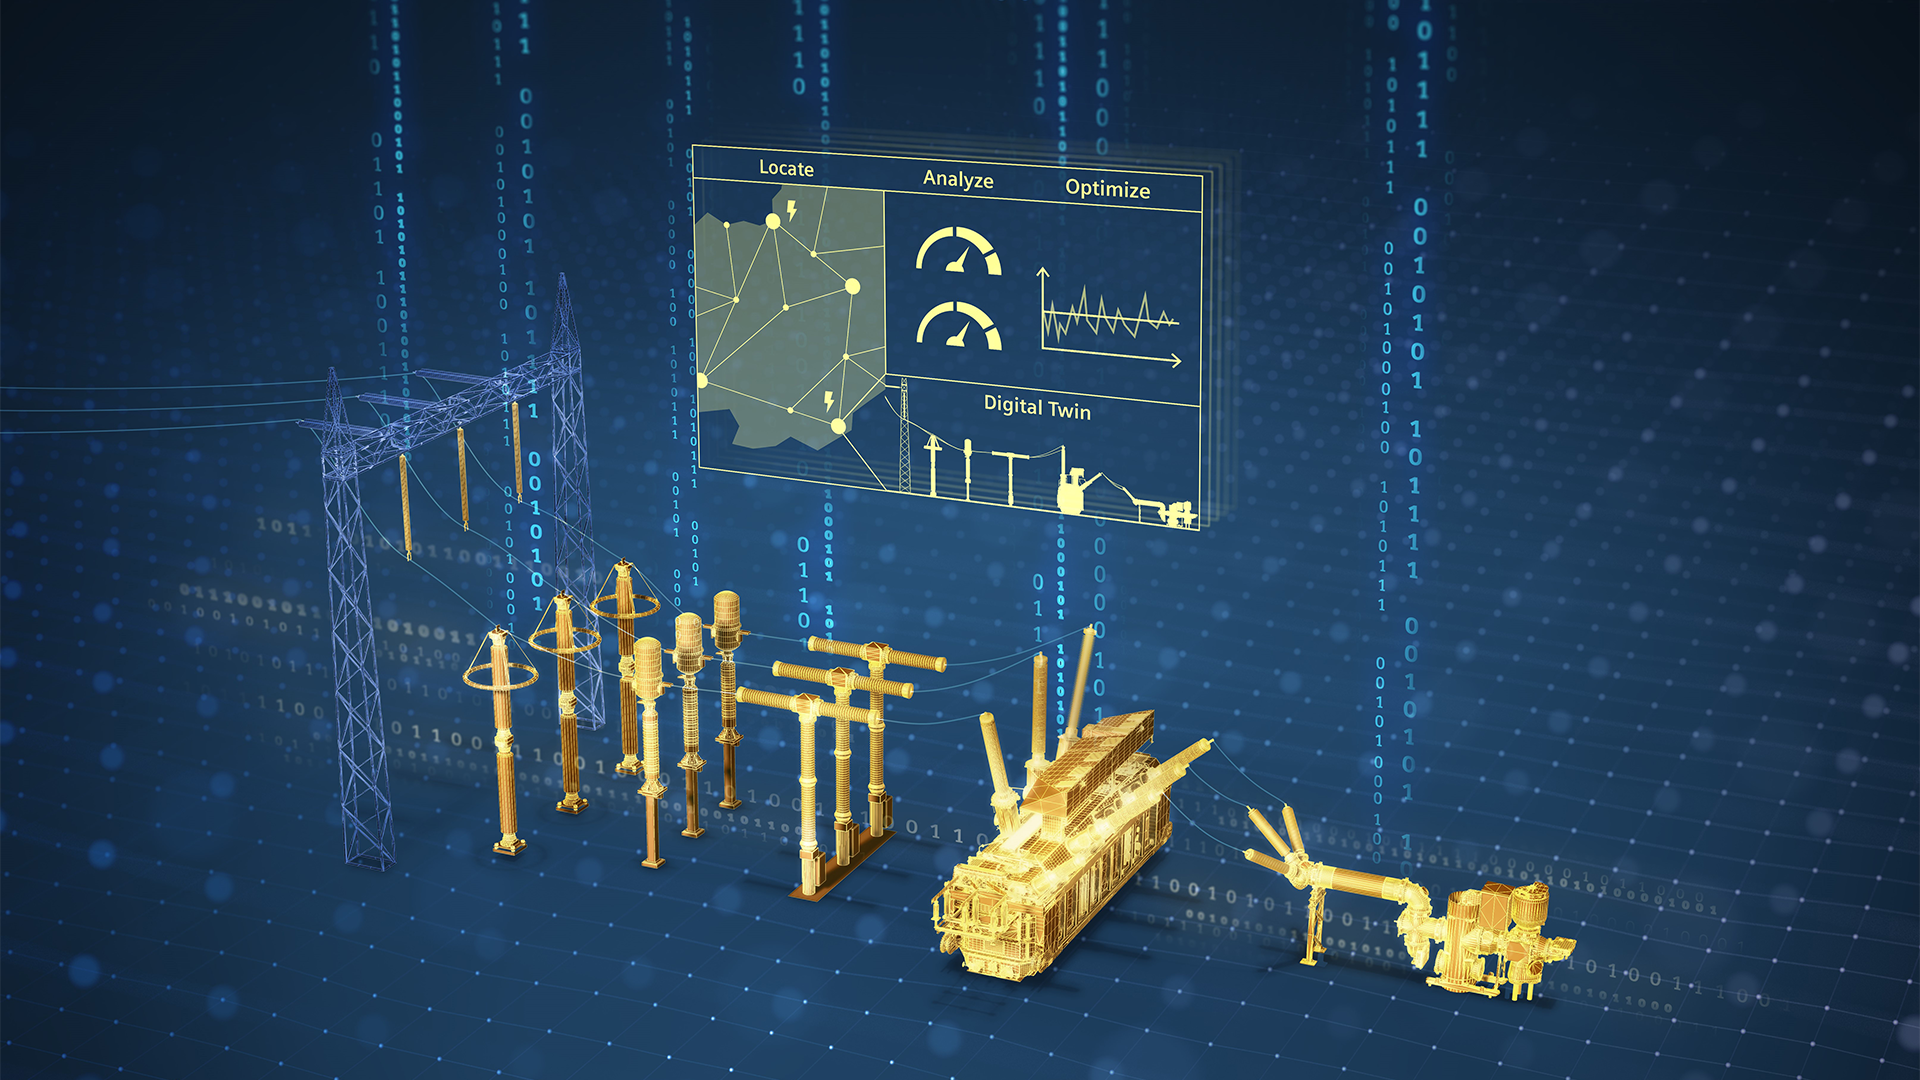 Siemens digitally connected Sensformer transformers